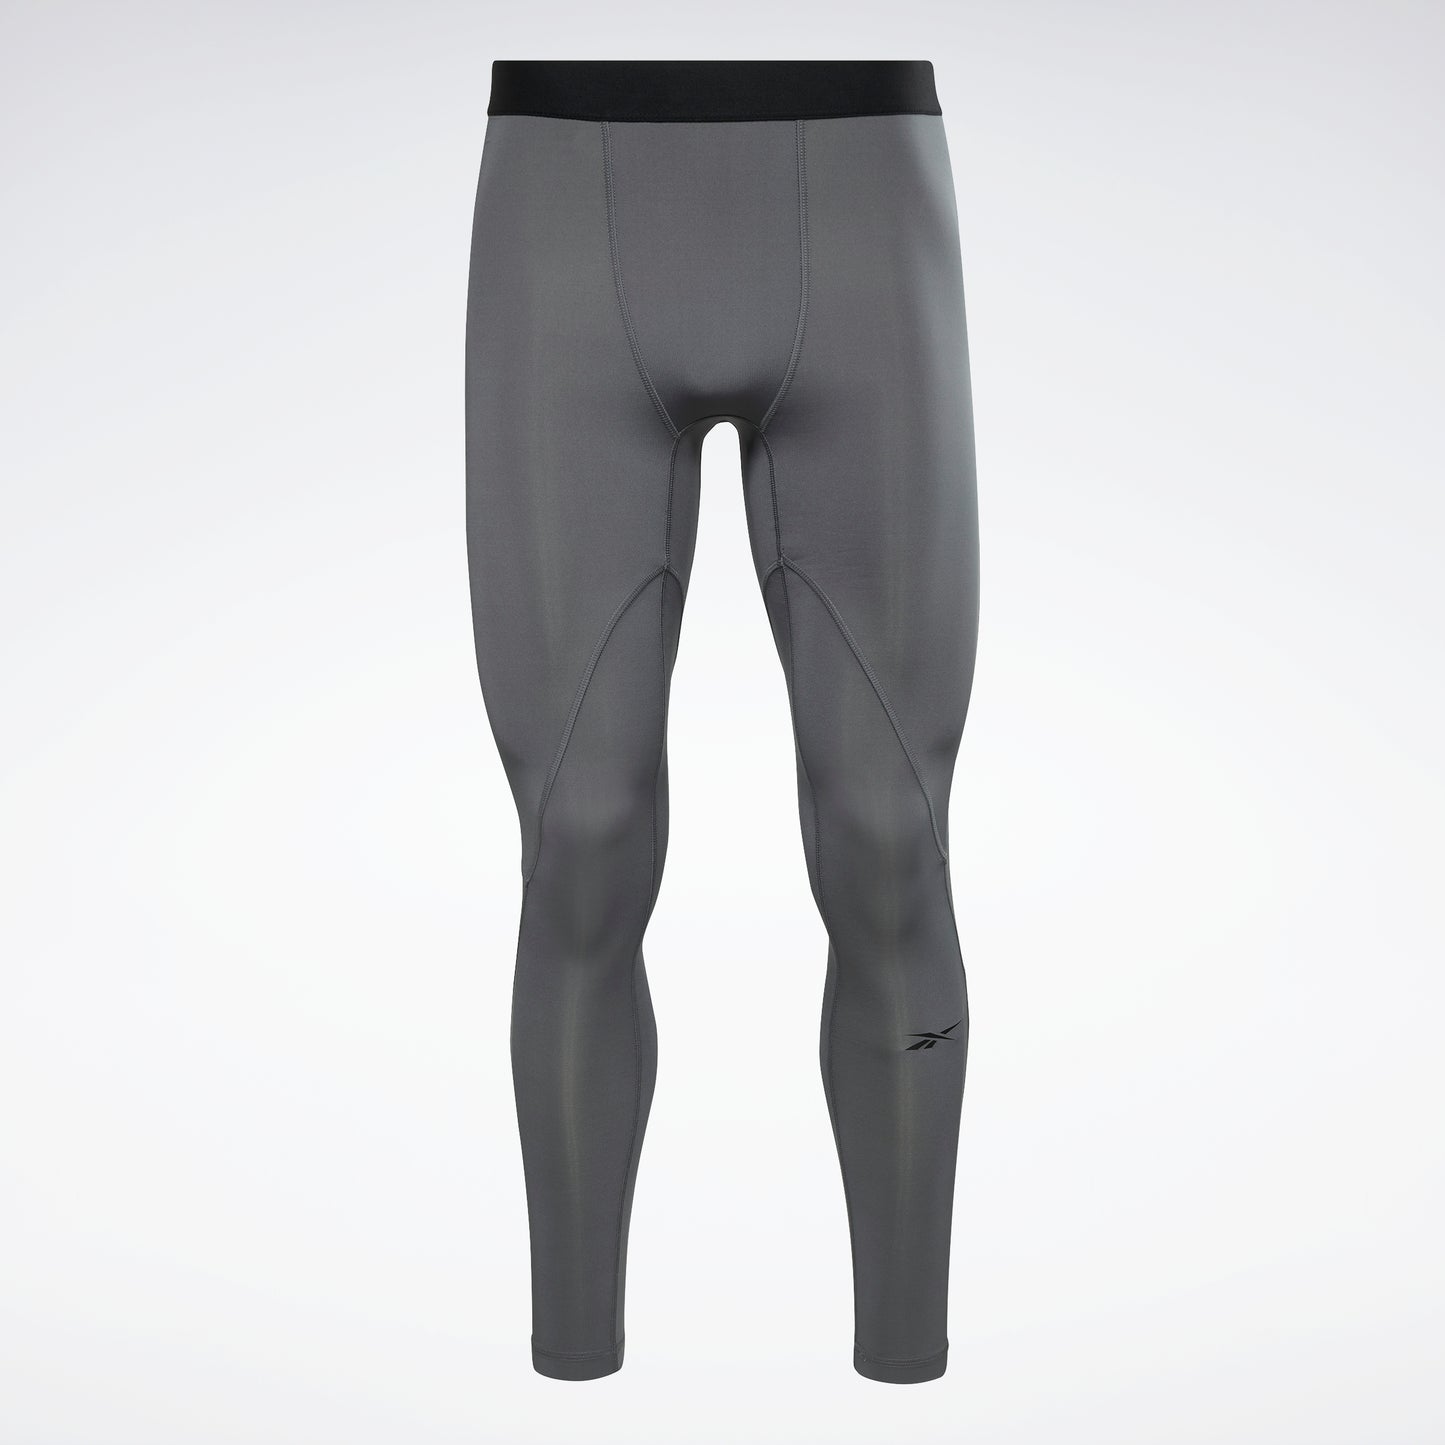 GANYANR Running Tights Men Compression Pants Gym Leggings